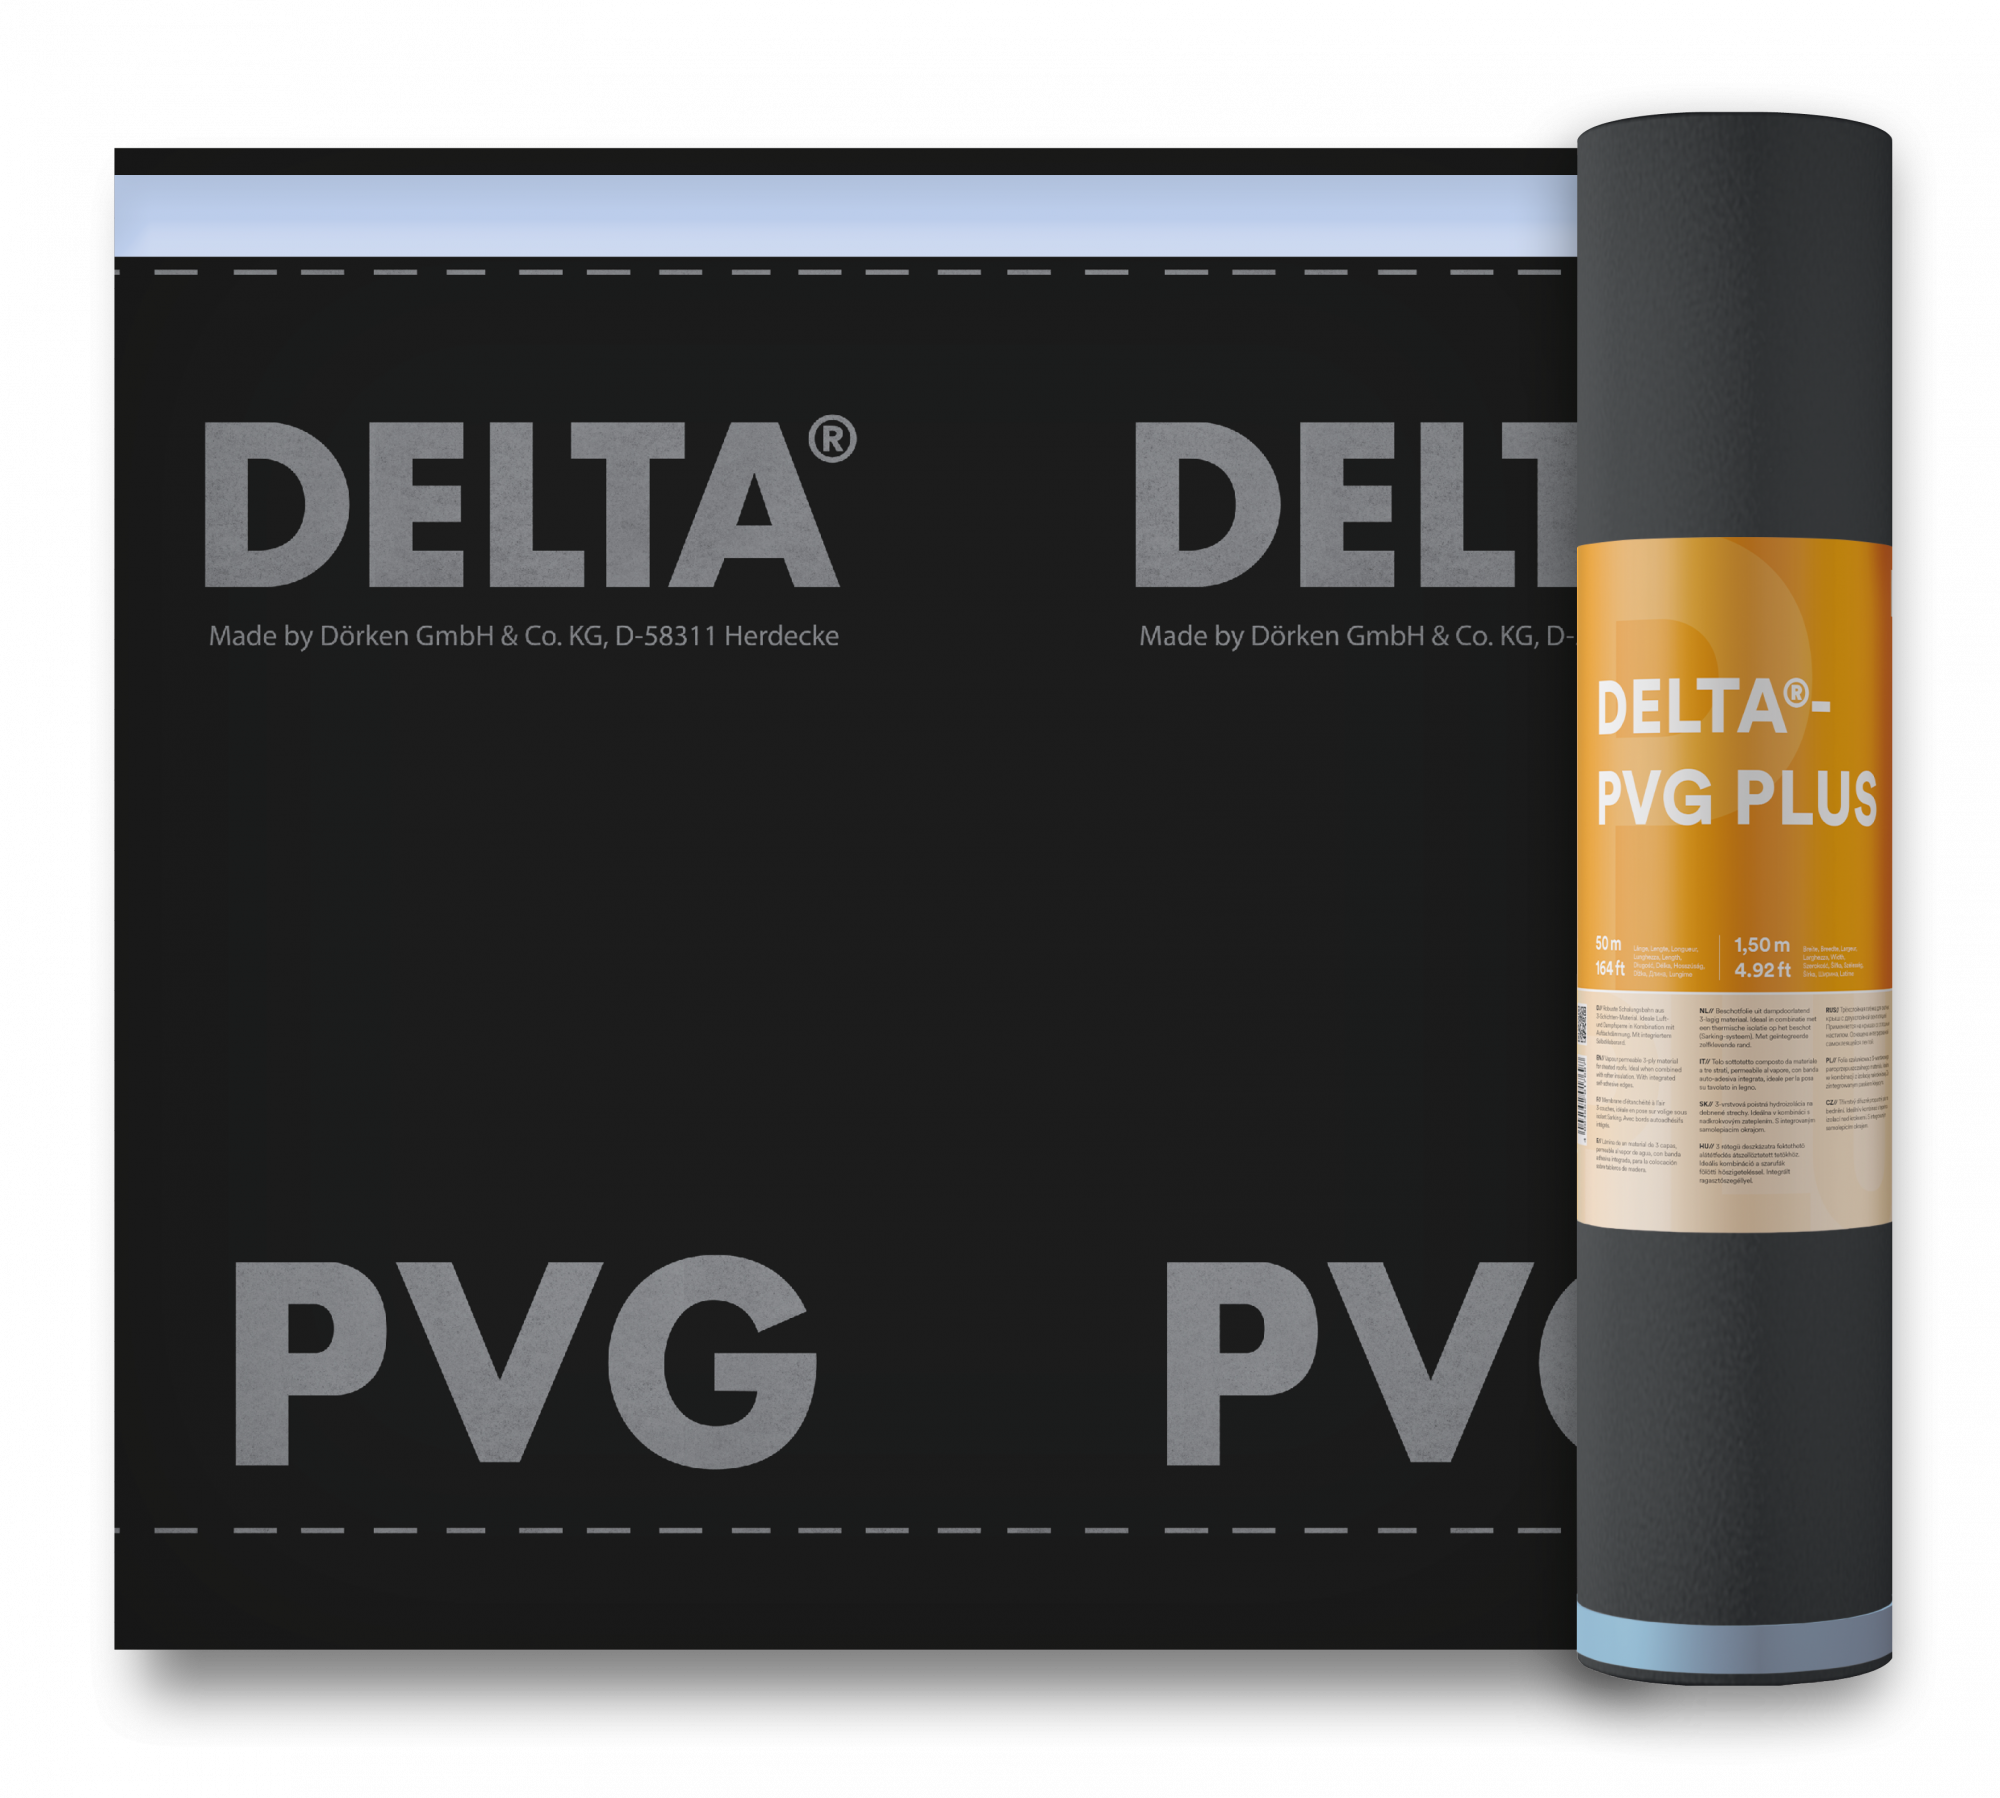 DELTA-PVG PLUS гидро- и пароизоляционная плёнка с двумя зонами проклейки, Sd=20 м